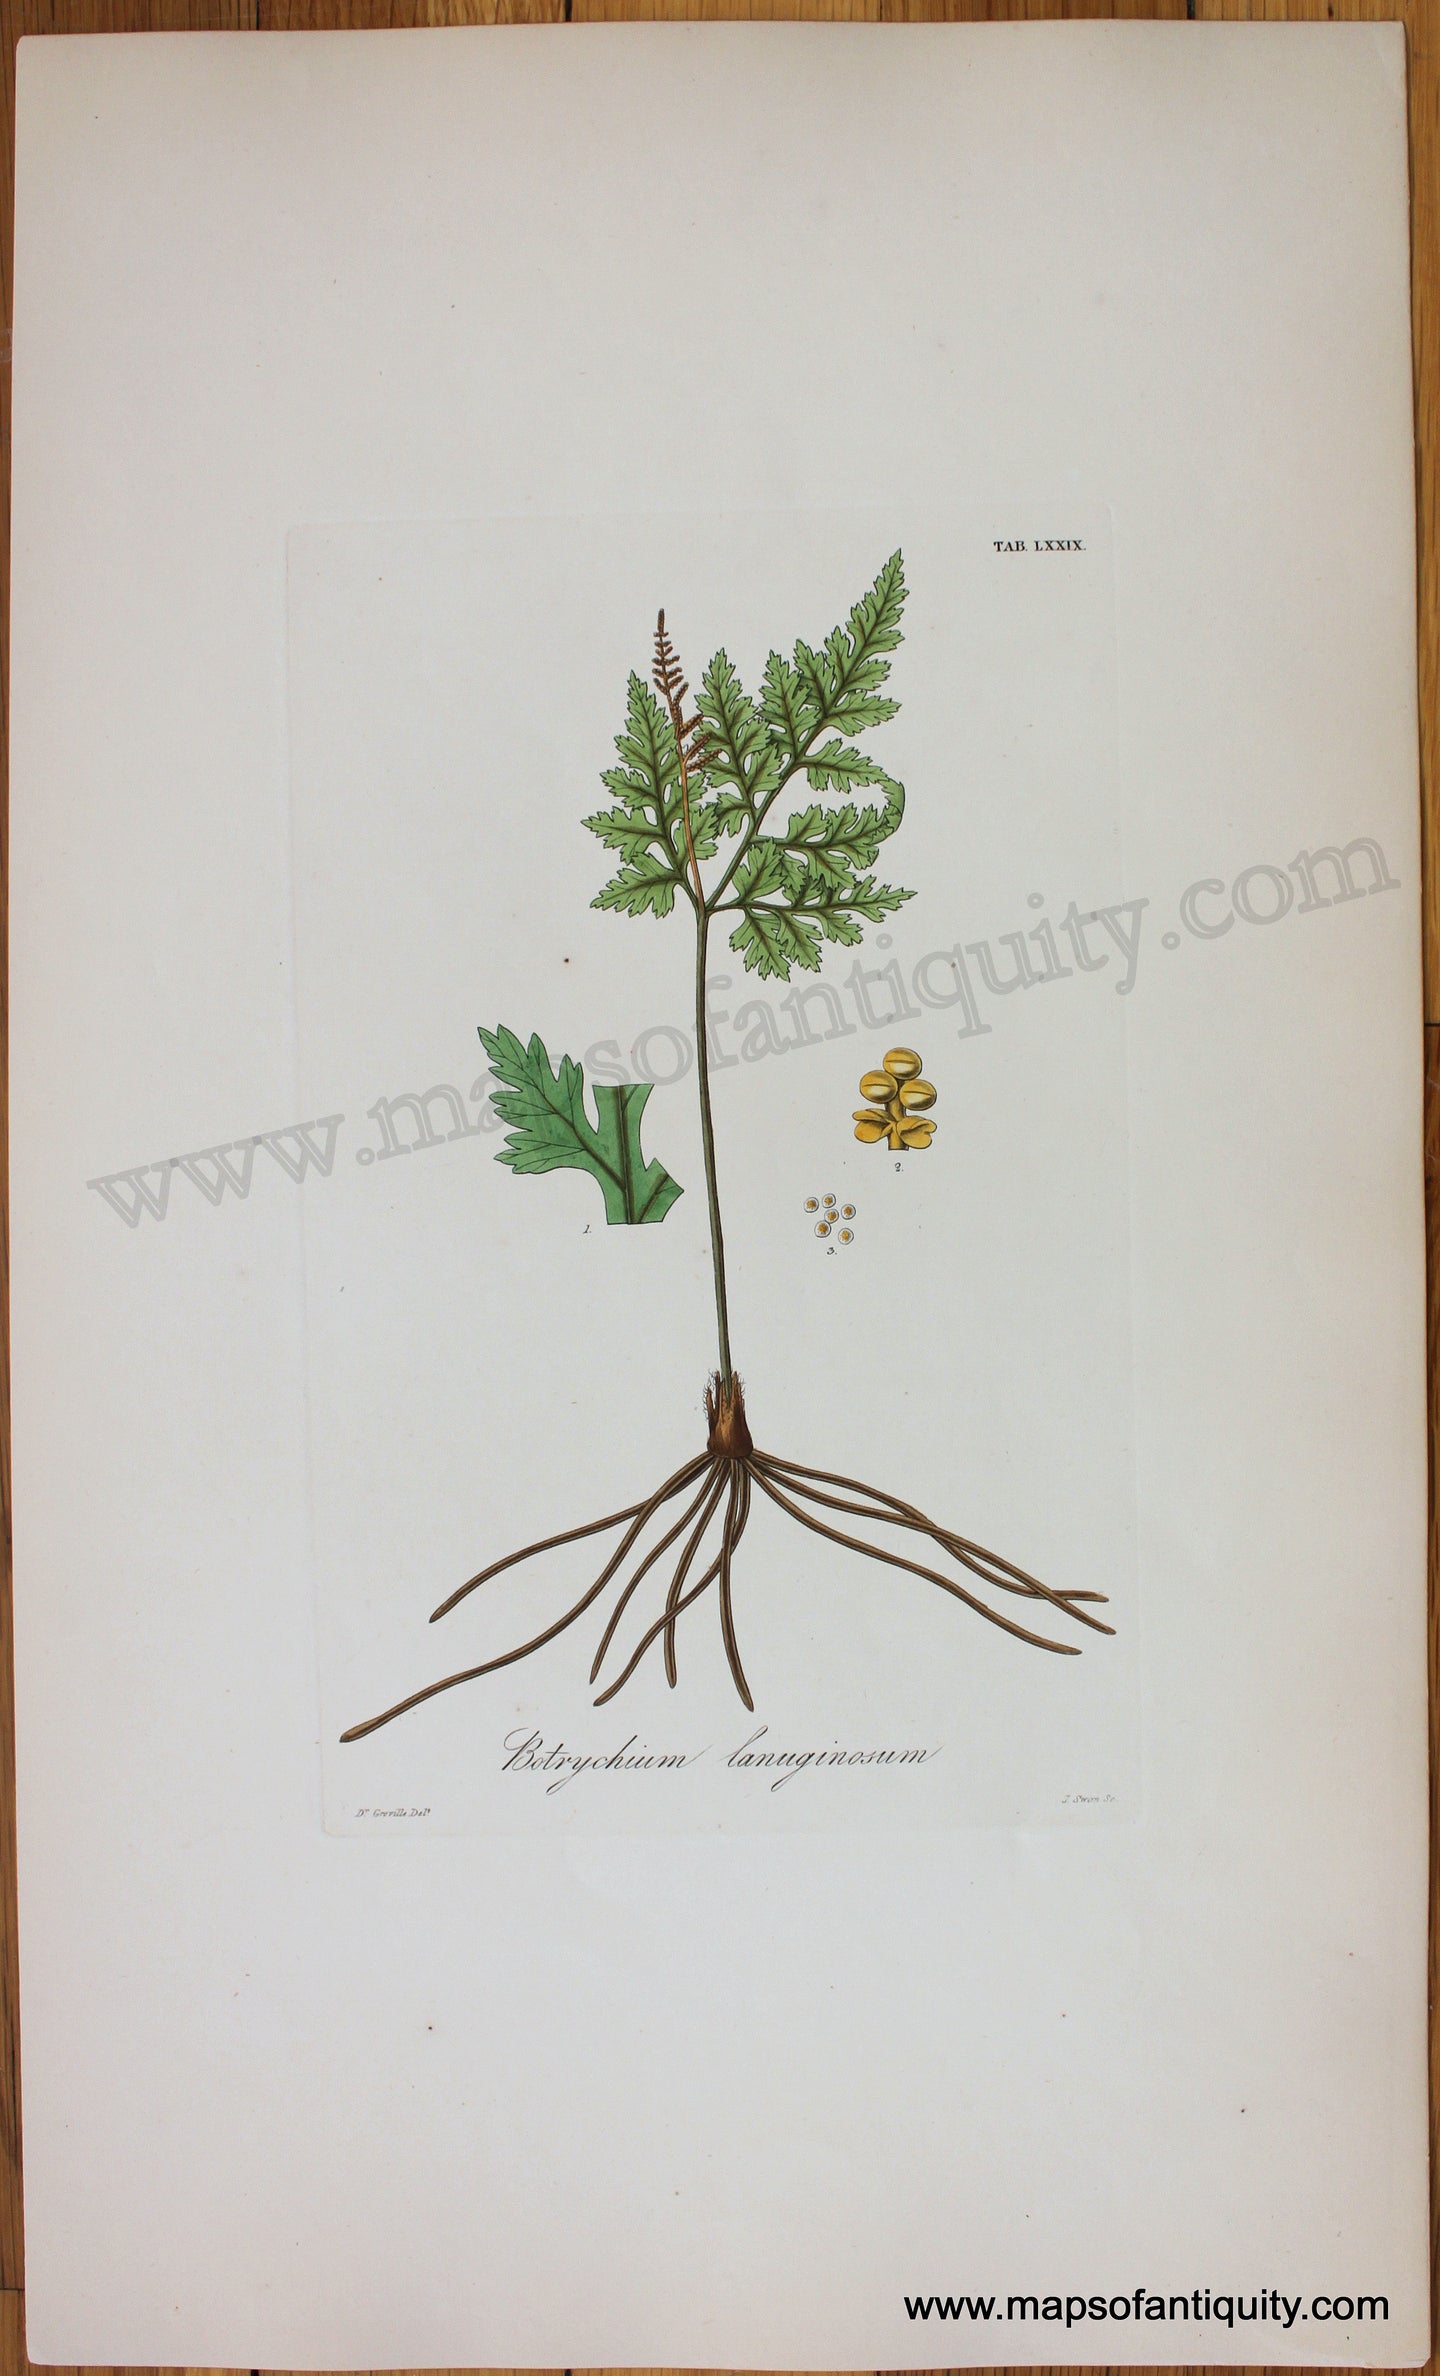 Antique-Botanical-Print-Botrychium-lanuginosum-1831-Hooker-Botanical--1800s-19th-century-Maps-of-Antiquity